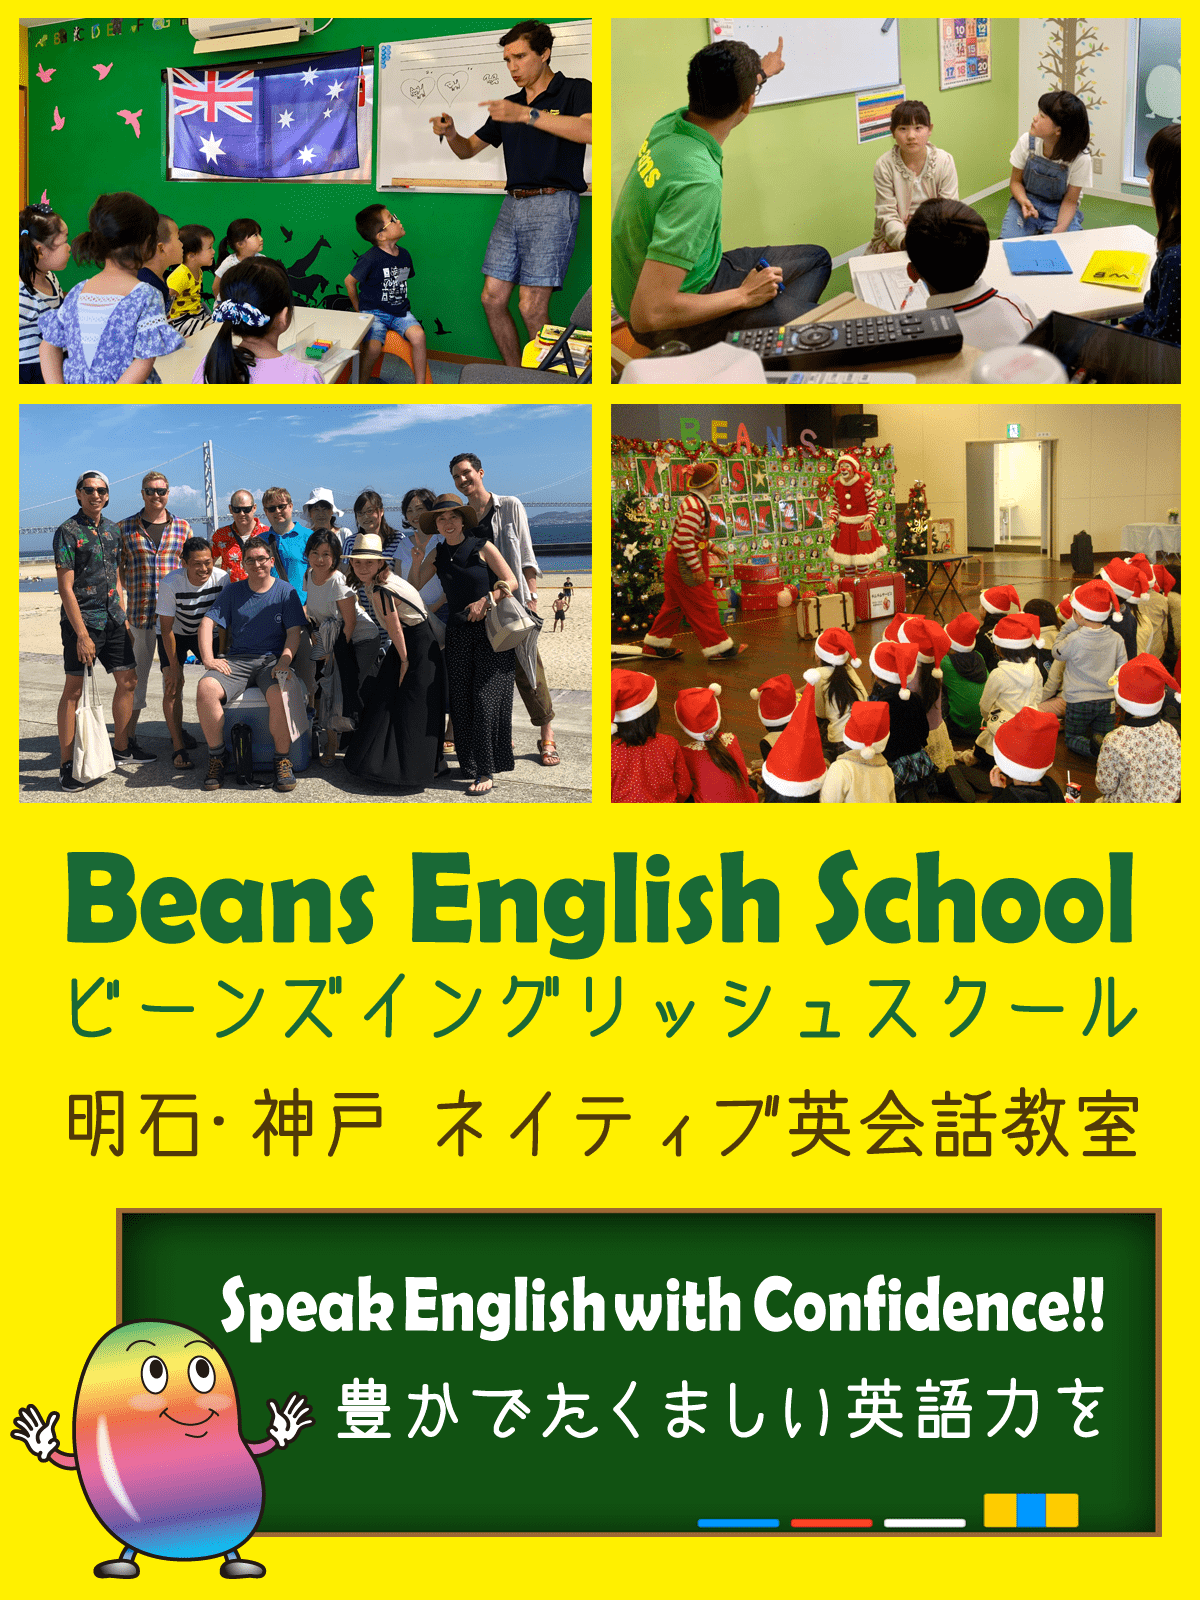 Beans Eikaiwa Author At ビーンズイングリッシュスクール 明石 神戸の英会話教室